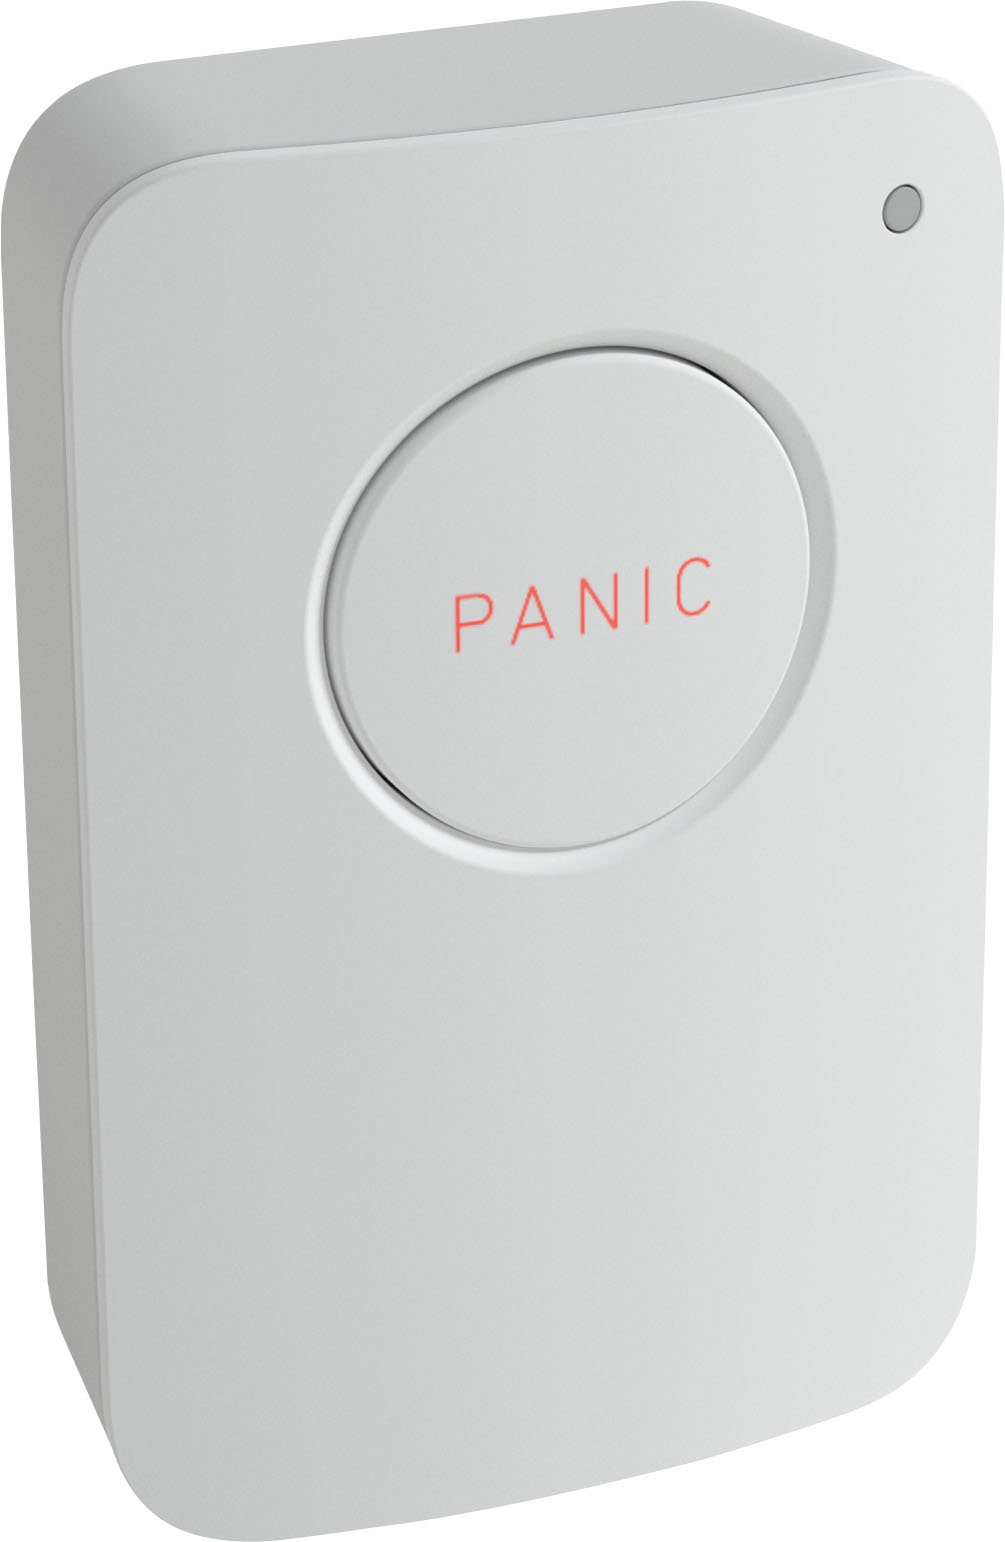 Angle View: SimpliSafe - Panic Button - White